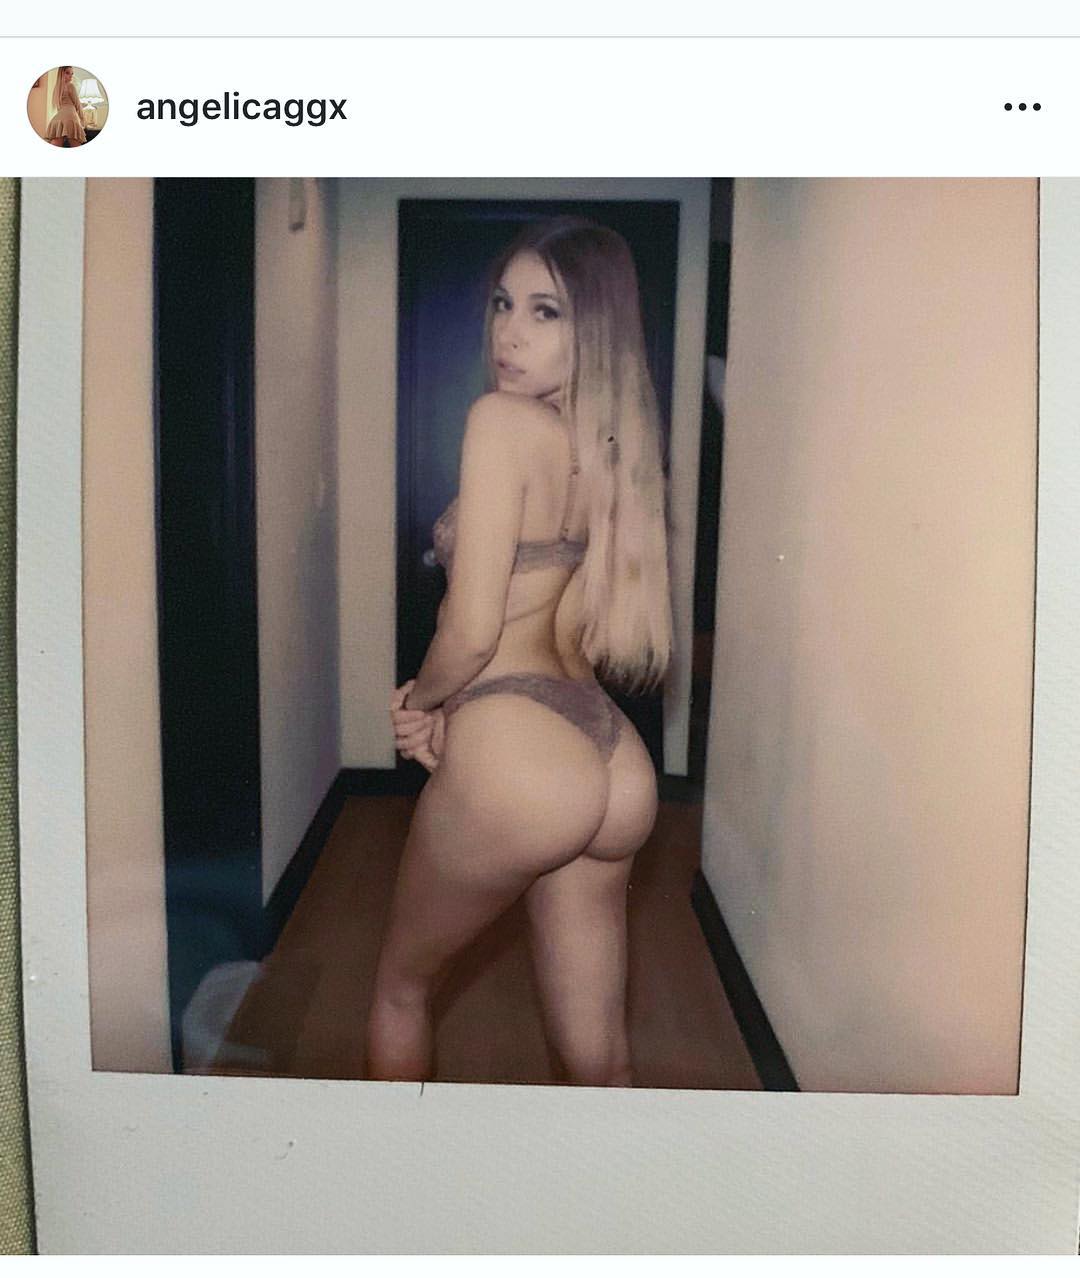 Angelica ggx Gigi X (akademiks girlfriend) sex tape and nudes photos leaks ...